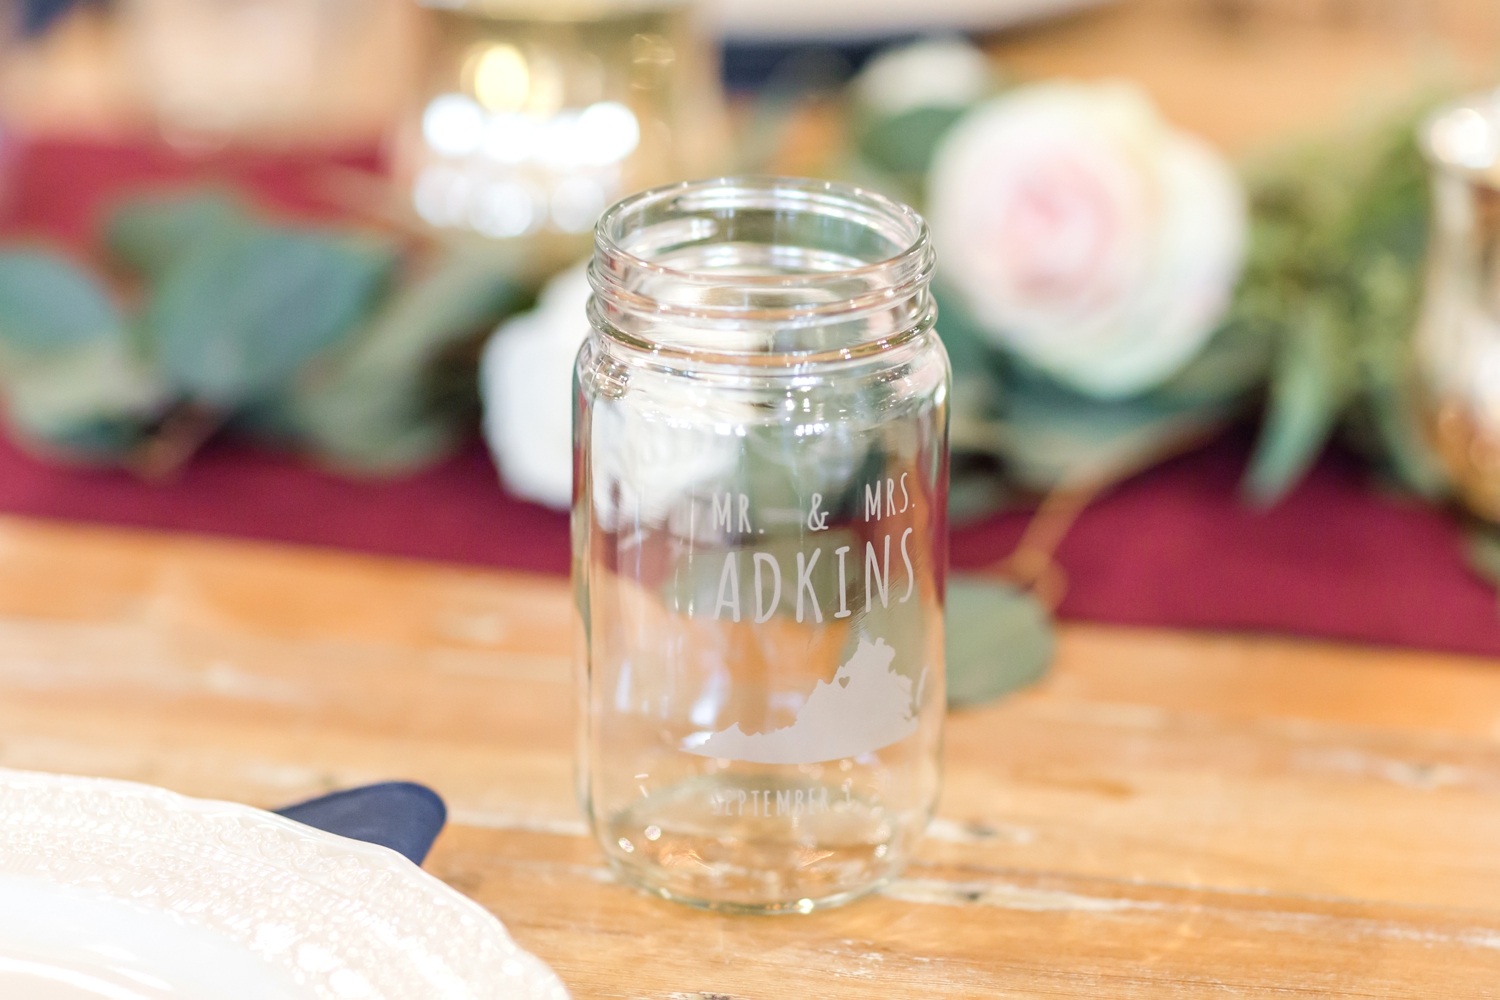  The mason jars were also the wedding favor! Love it. 